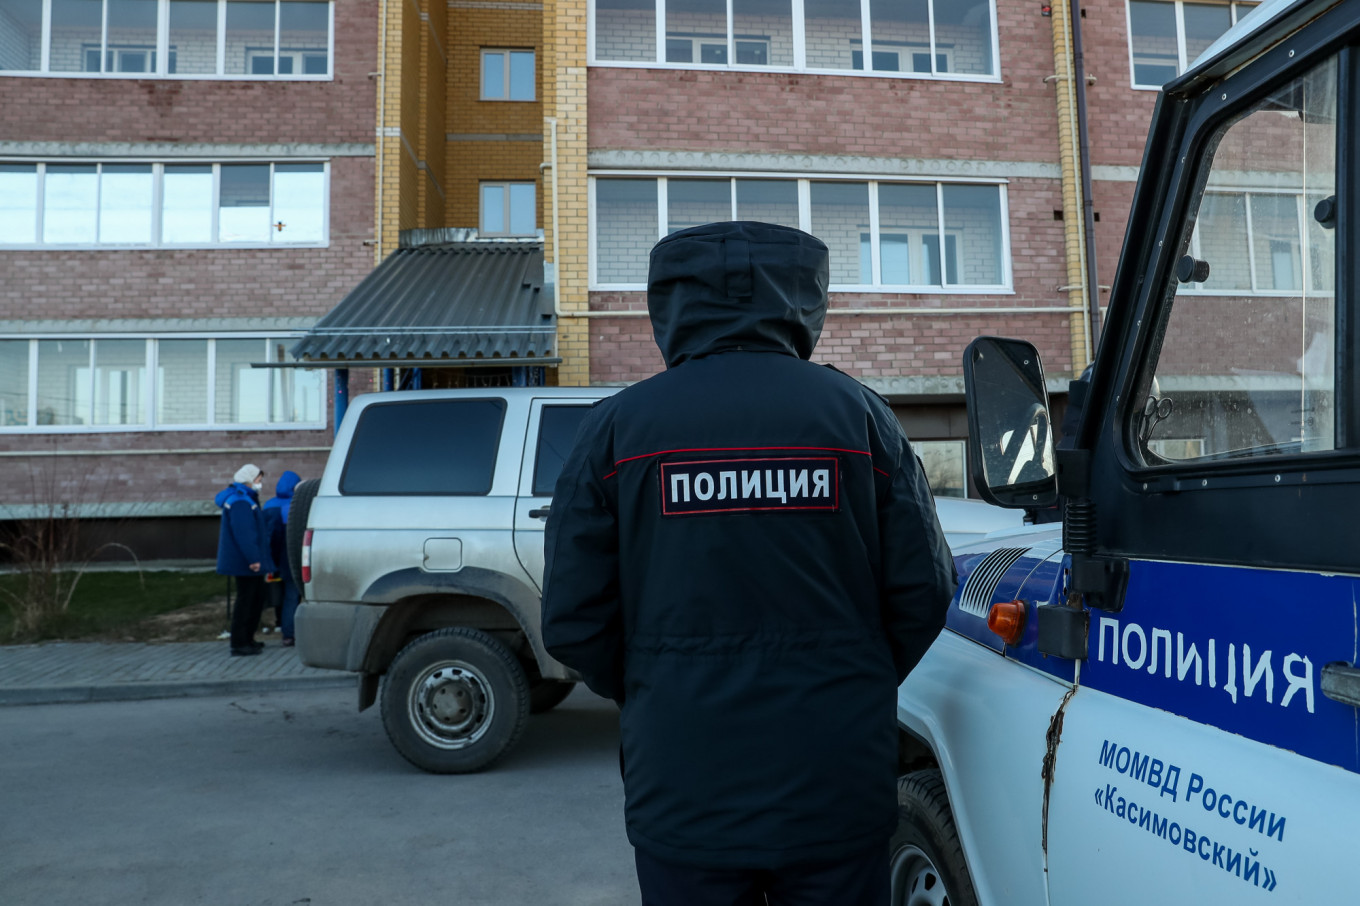 Russian Man Shoots, Kills 5 Neighbors Over Noise Complaint During Quarantine – Reports